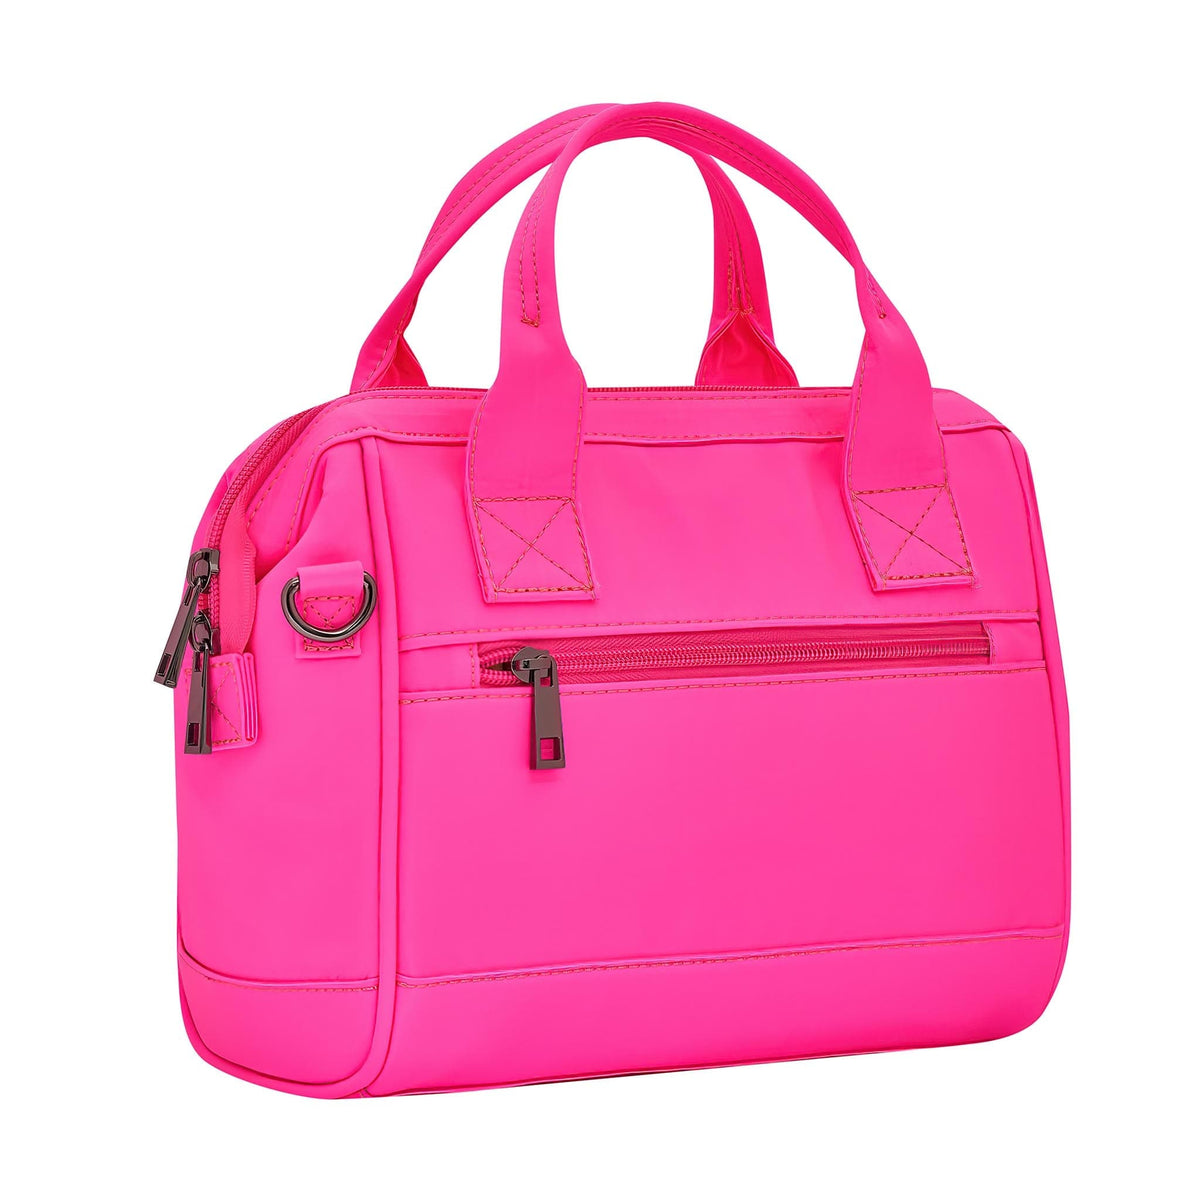 Bon Maxie Bags Go! Crossbody Bag - Neon Pink